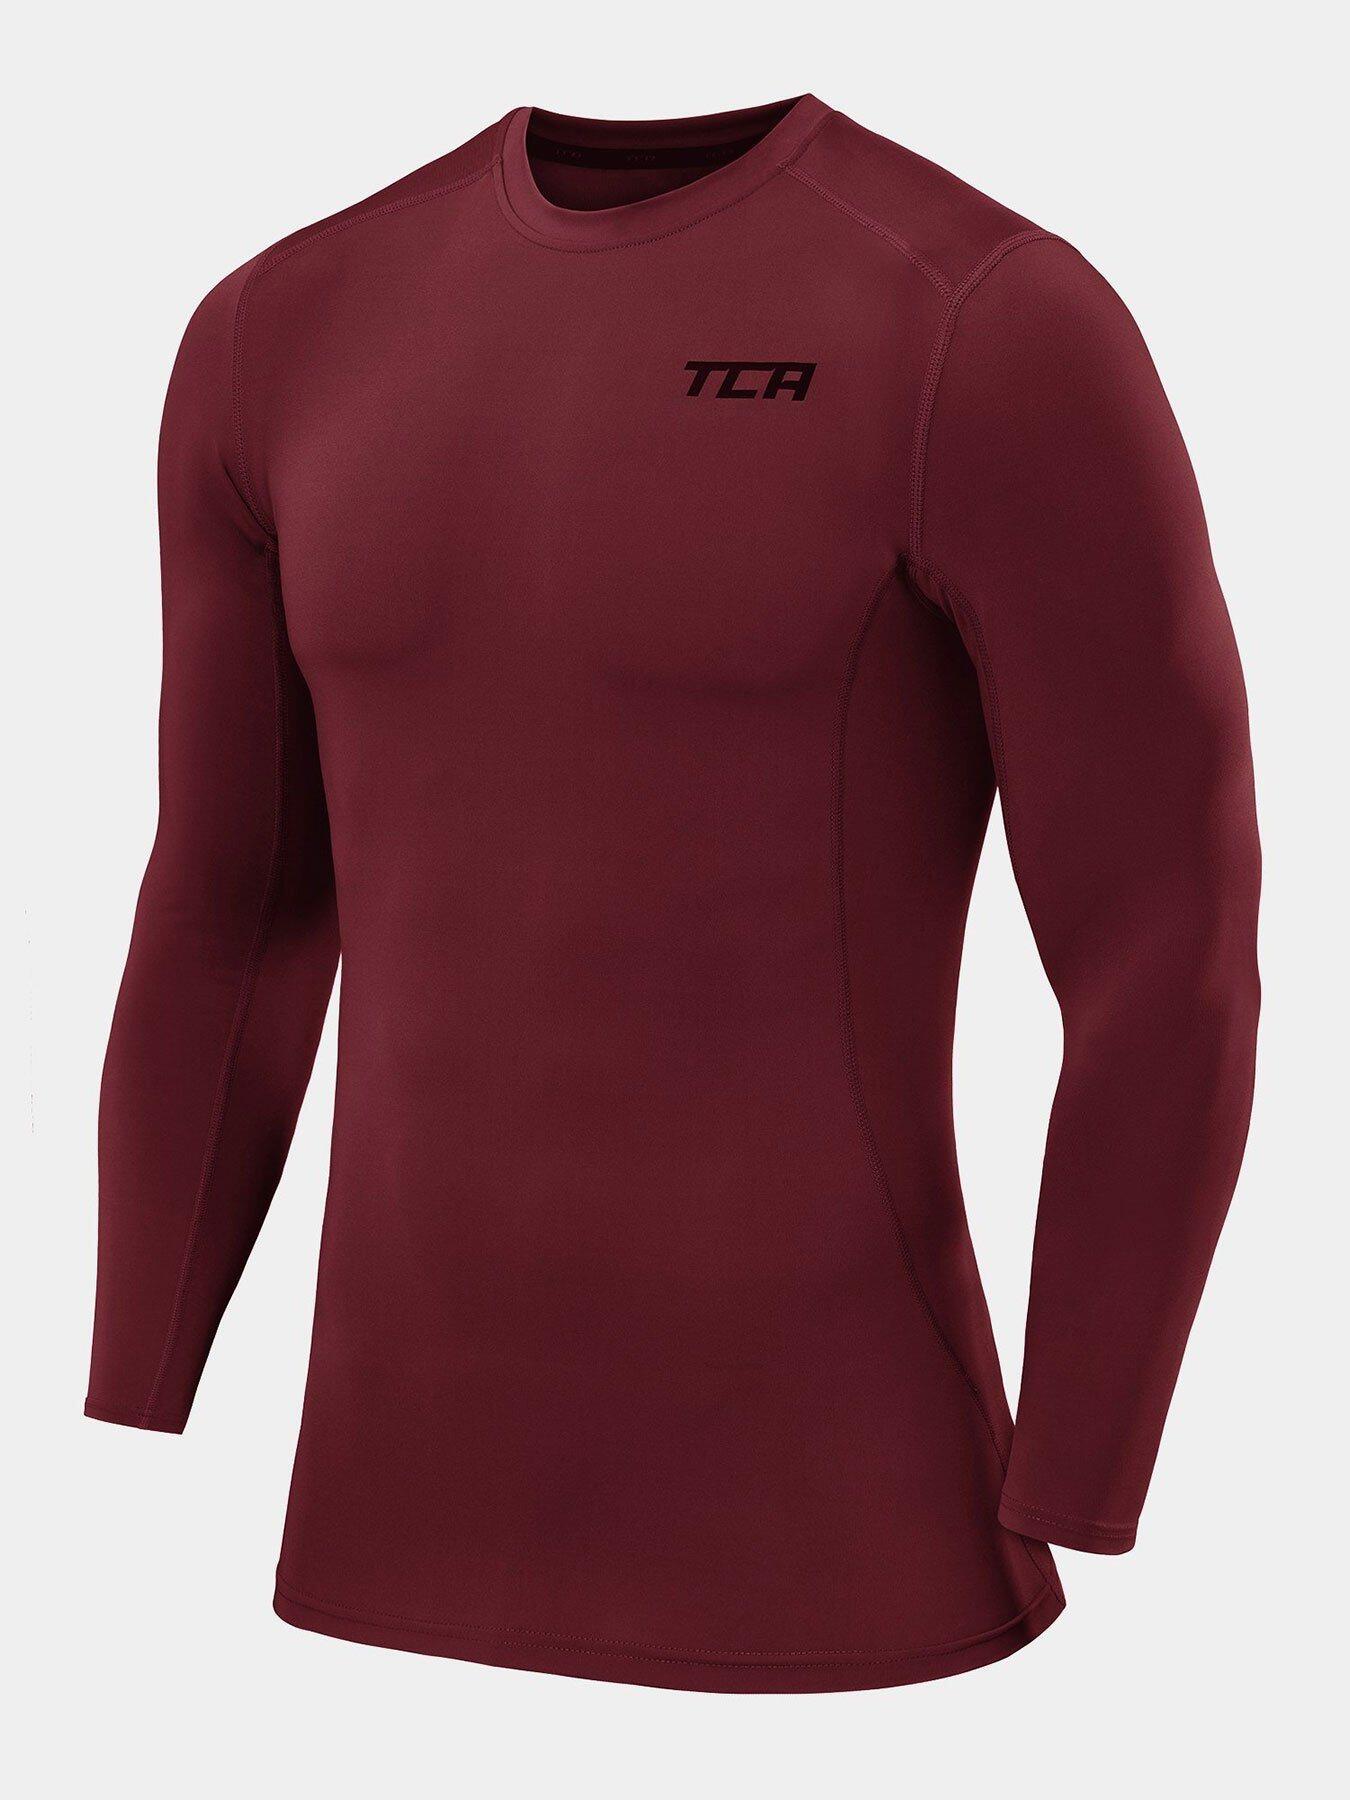 TCA Men's Power Base Layer Compression Long Sleeve Top - Cabernet